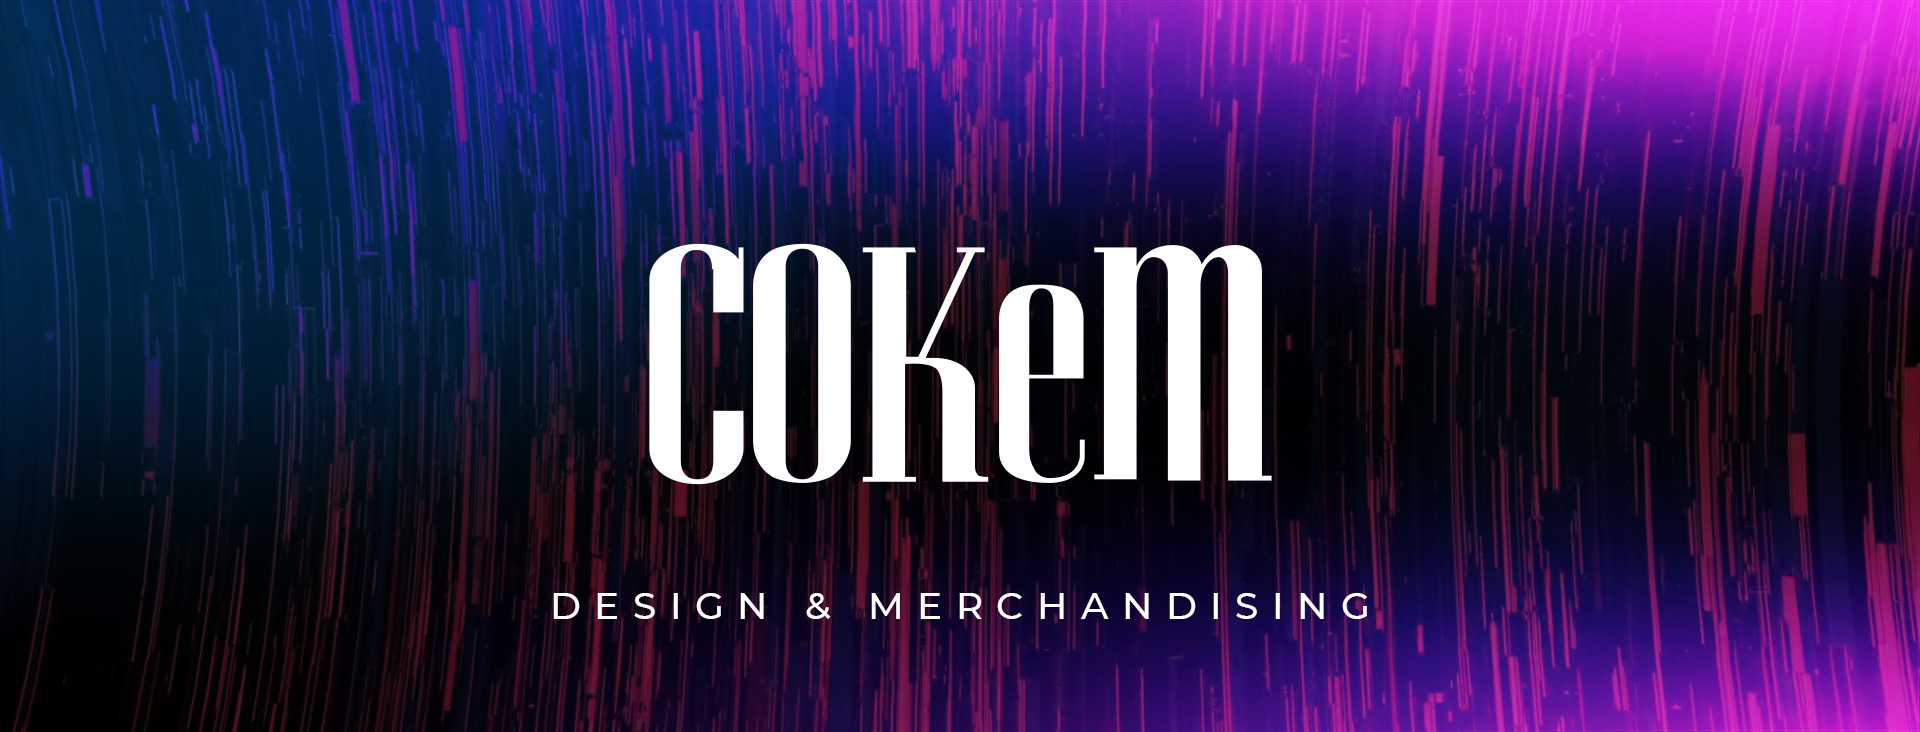 Design Merchandising Banner